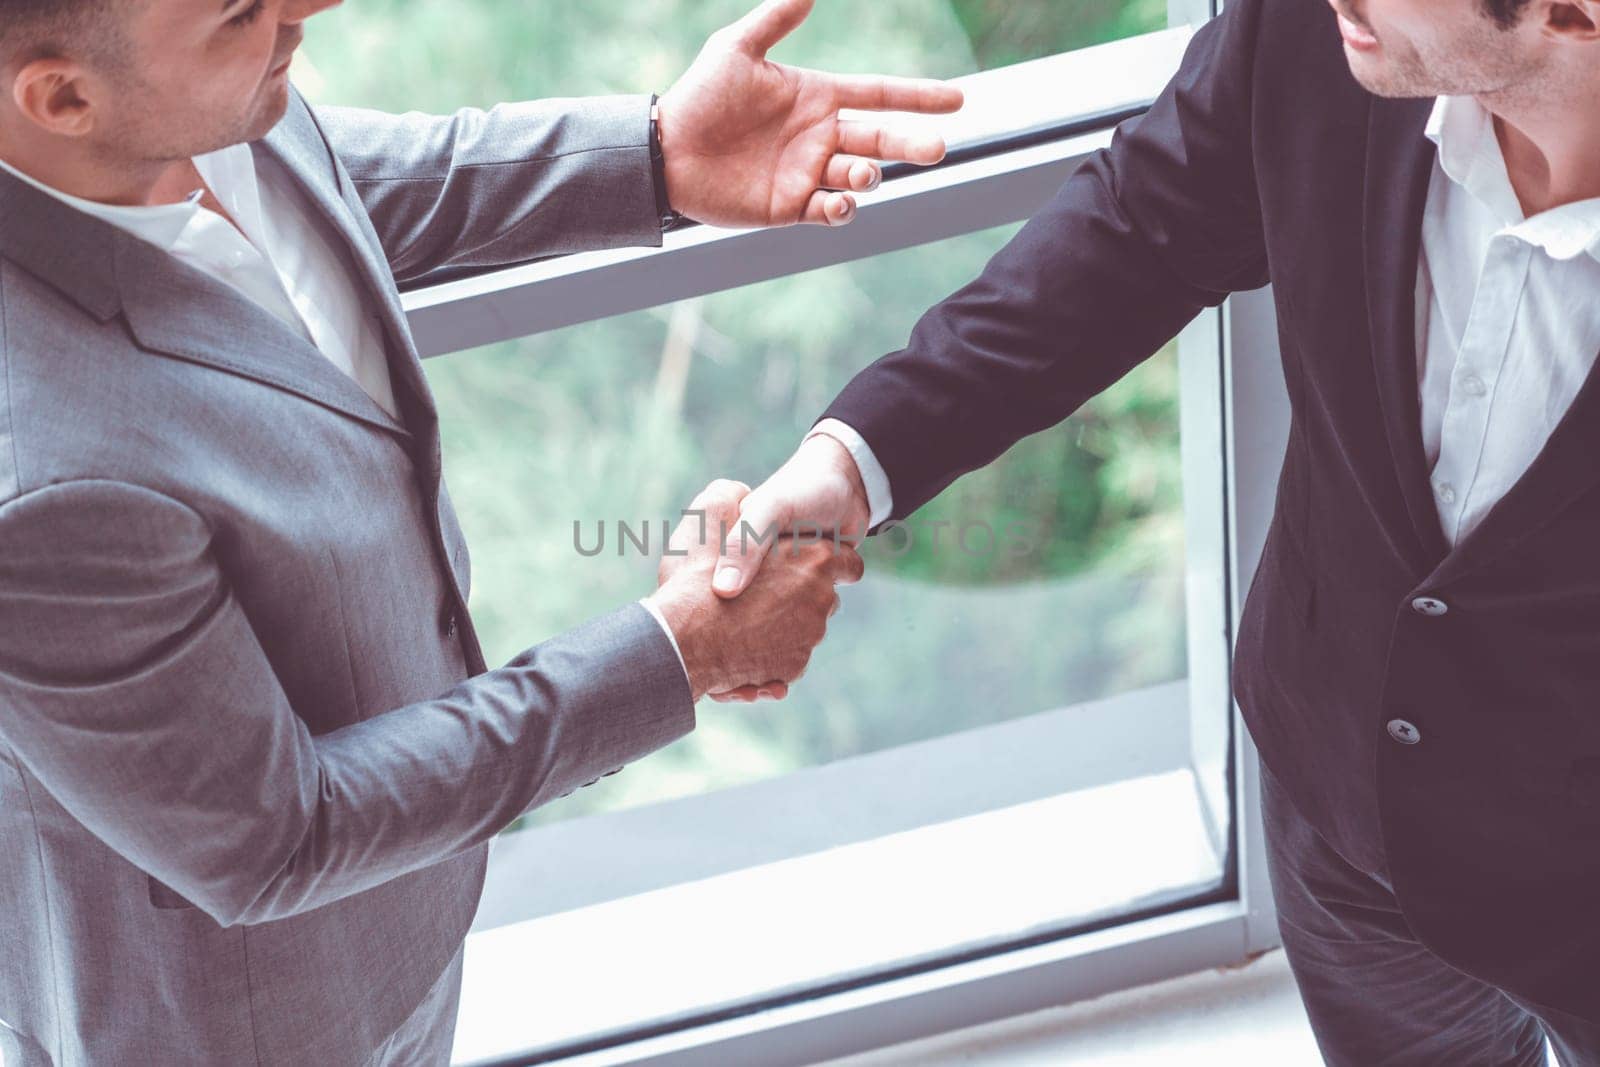 Businessmen handshake business deal in office. uds by biancoblue